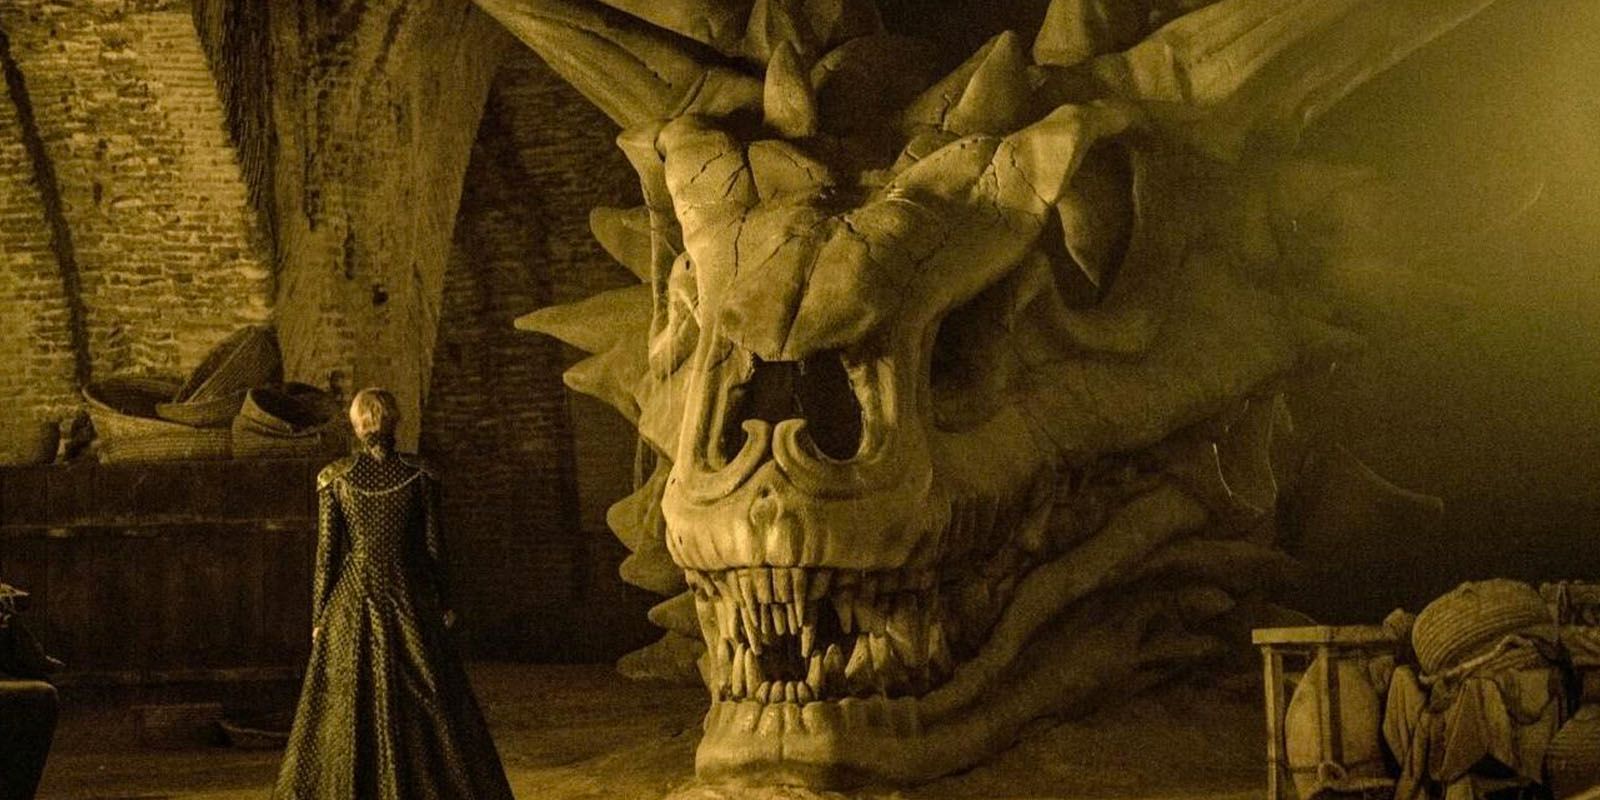 Cersei (Lena Headey) looks at Balerion's skull